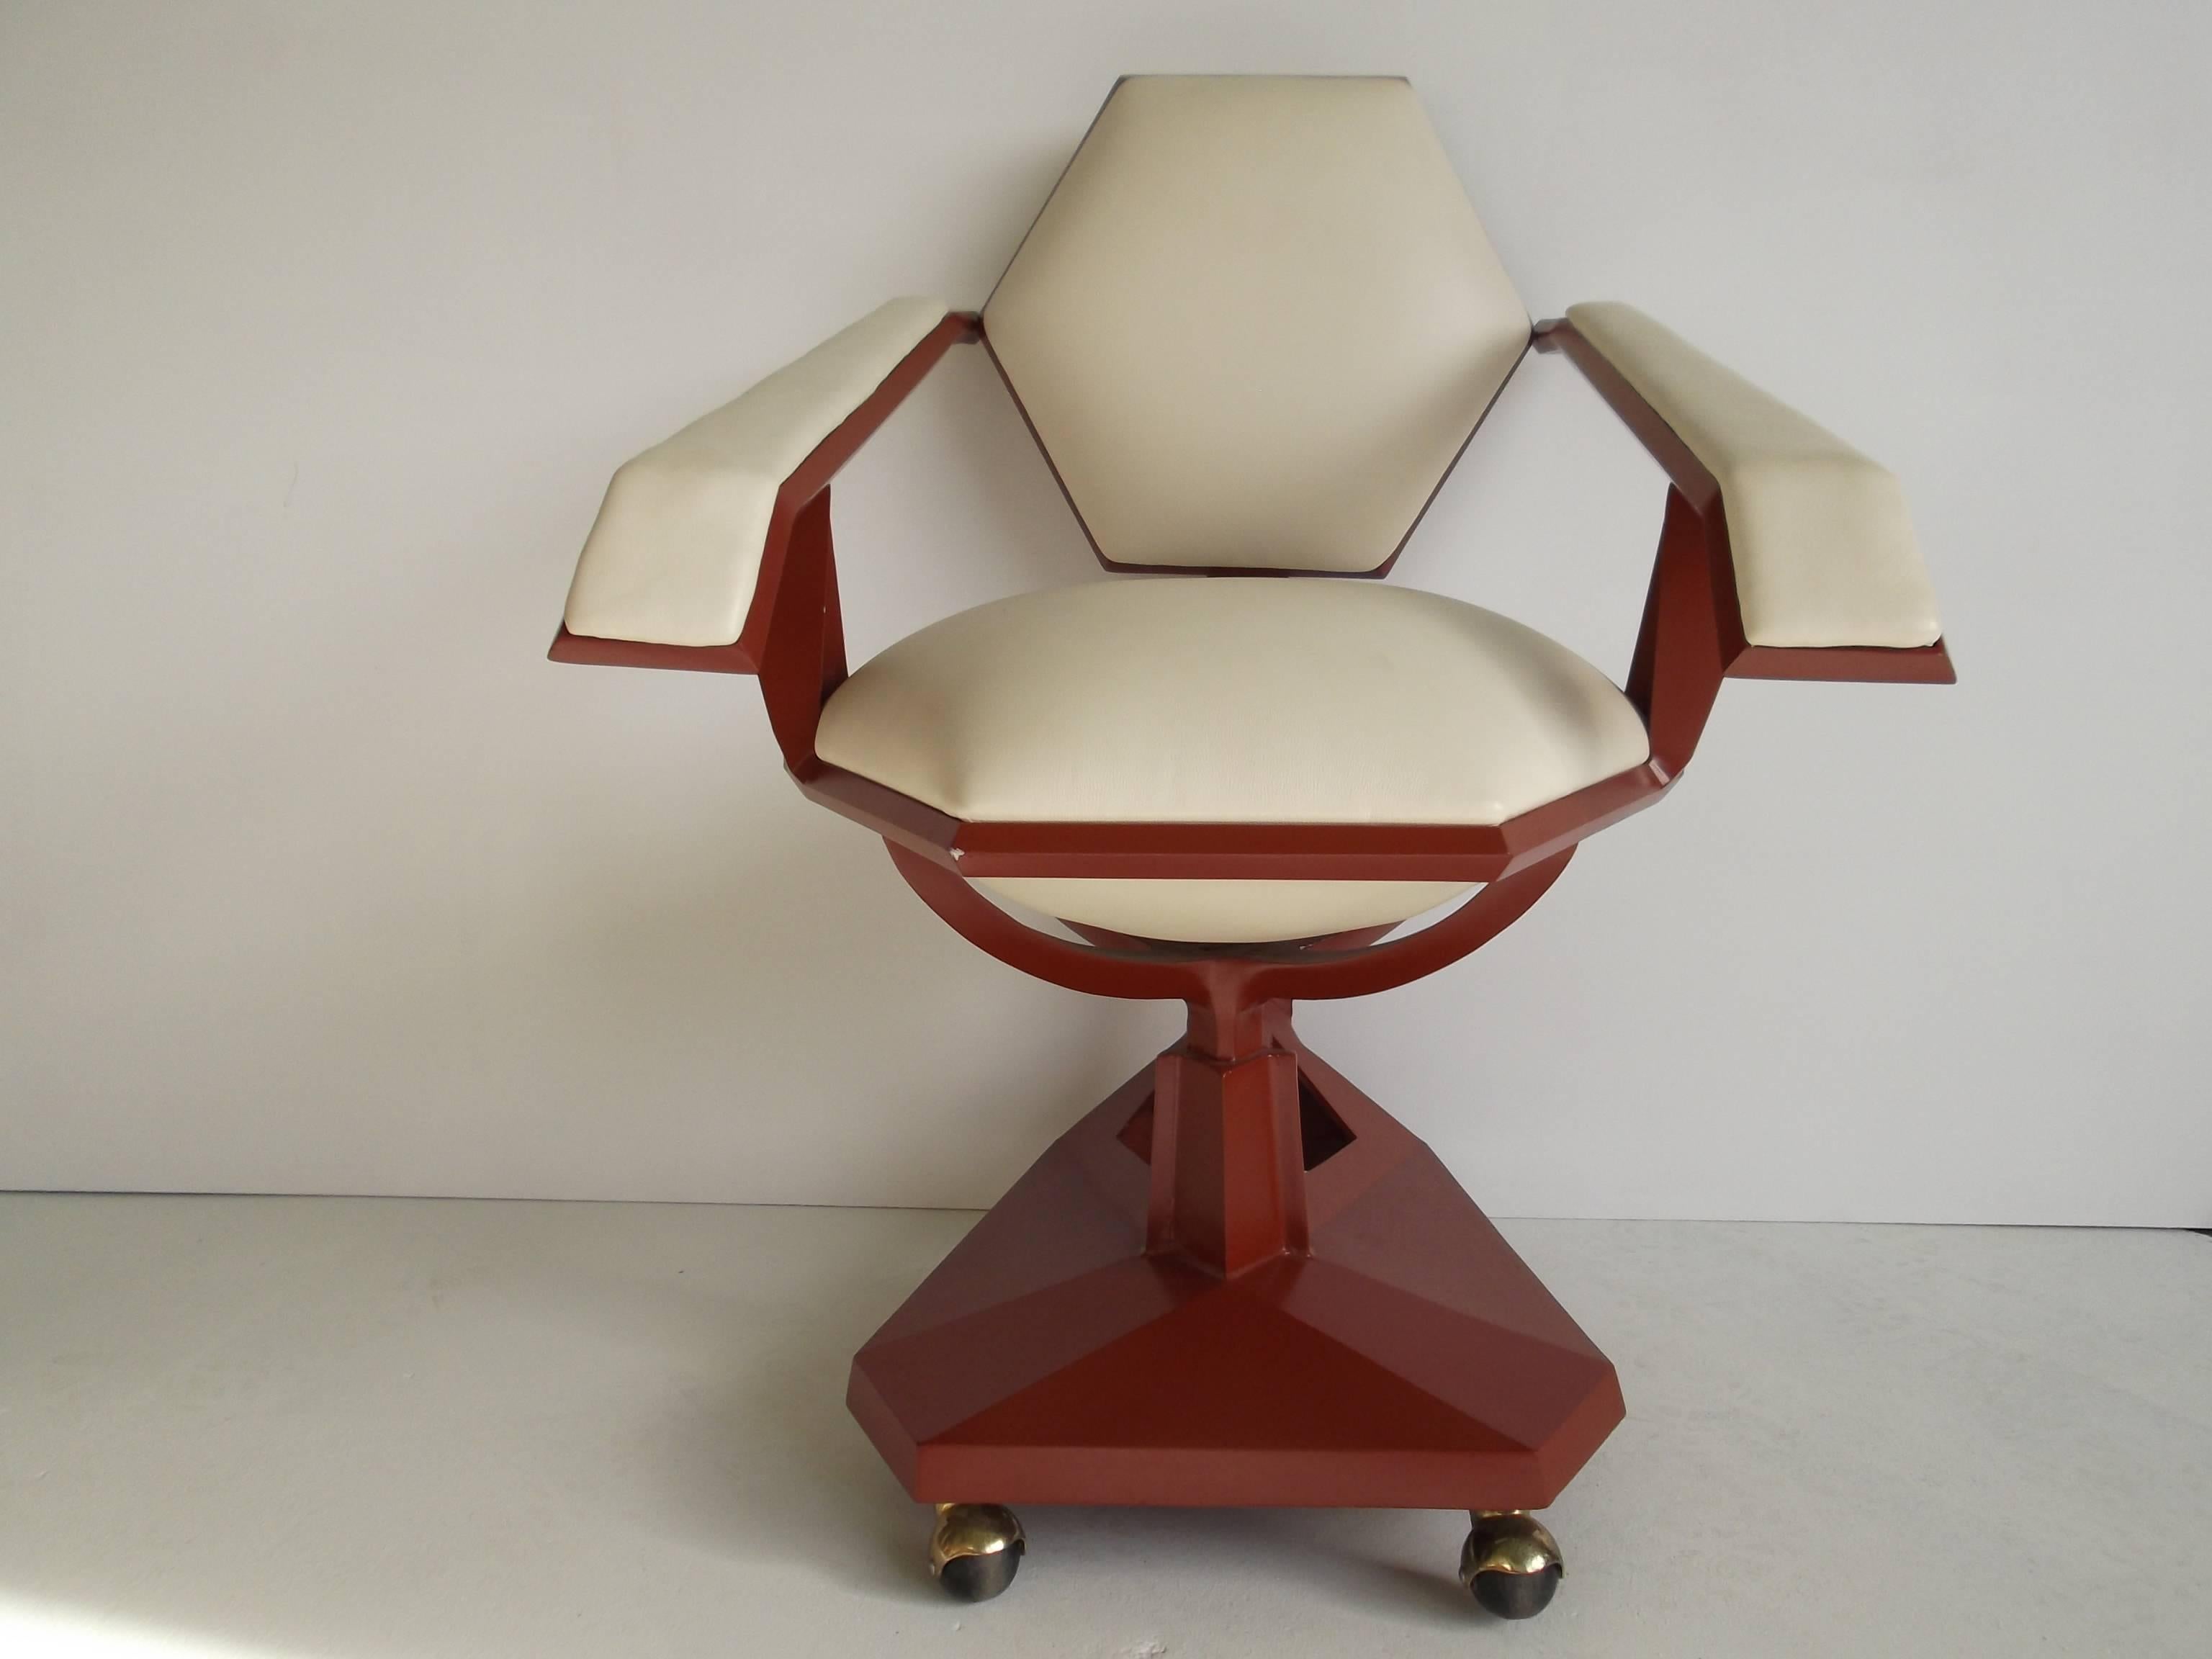 Welded Frank Lloyd Wright Price Tower Secretary Armchair, 1955 For Sale